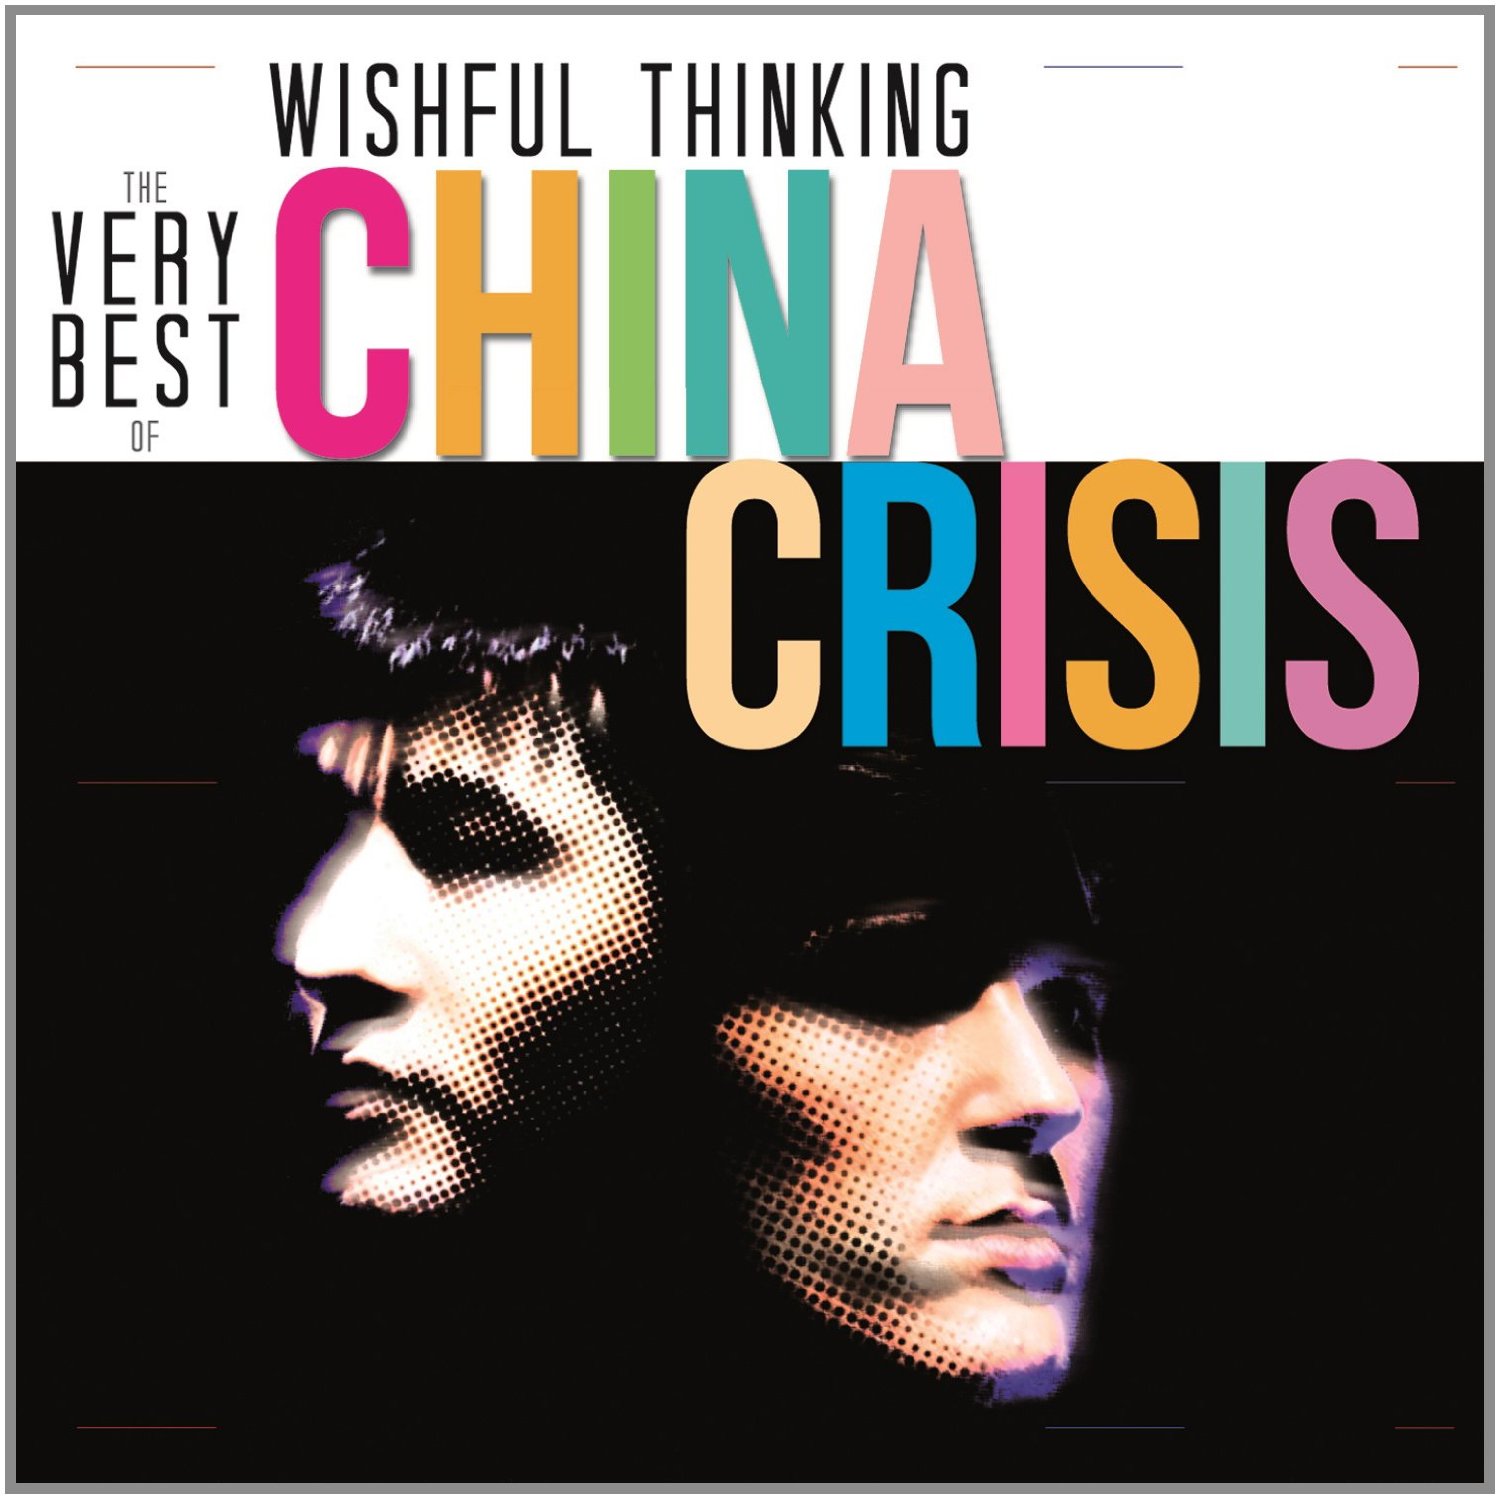 China Crisis - China Crises (Spectrum Collection) (Music CD)